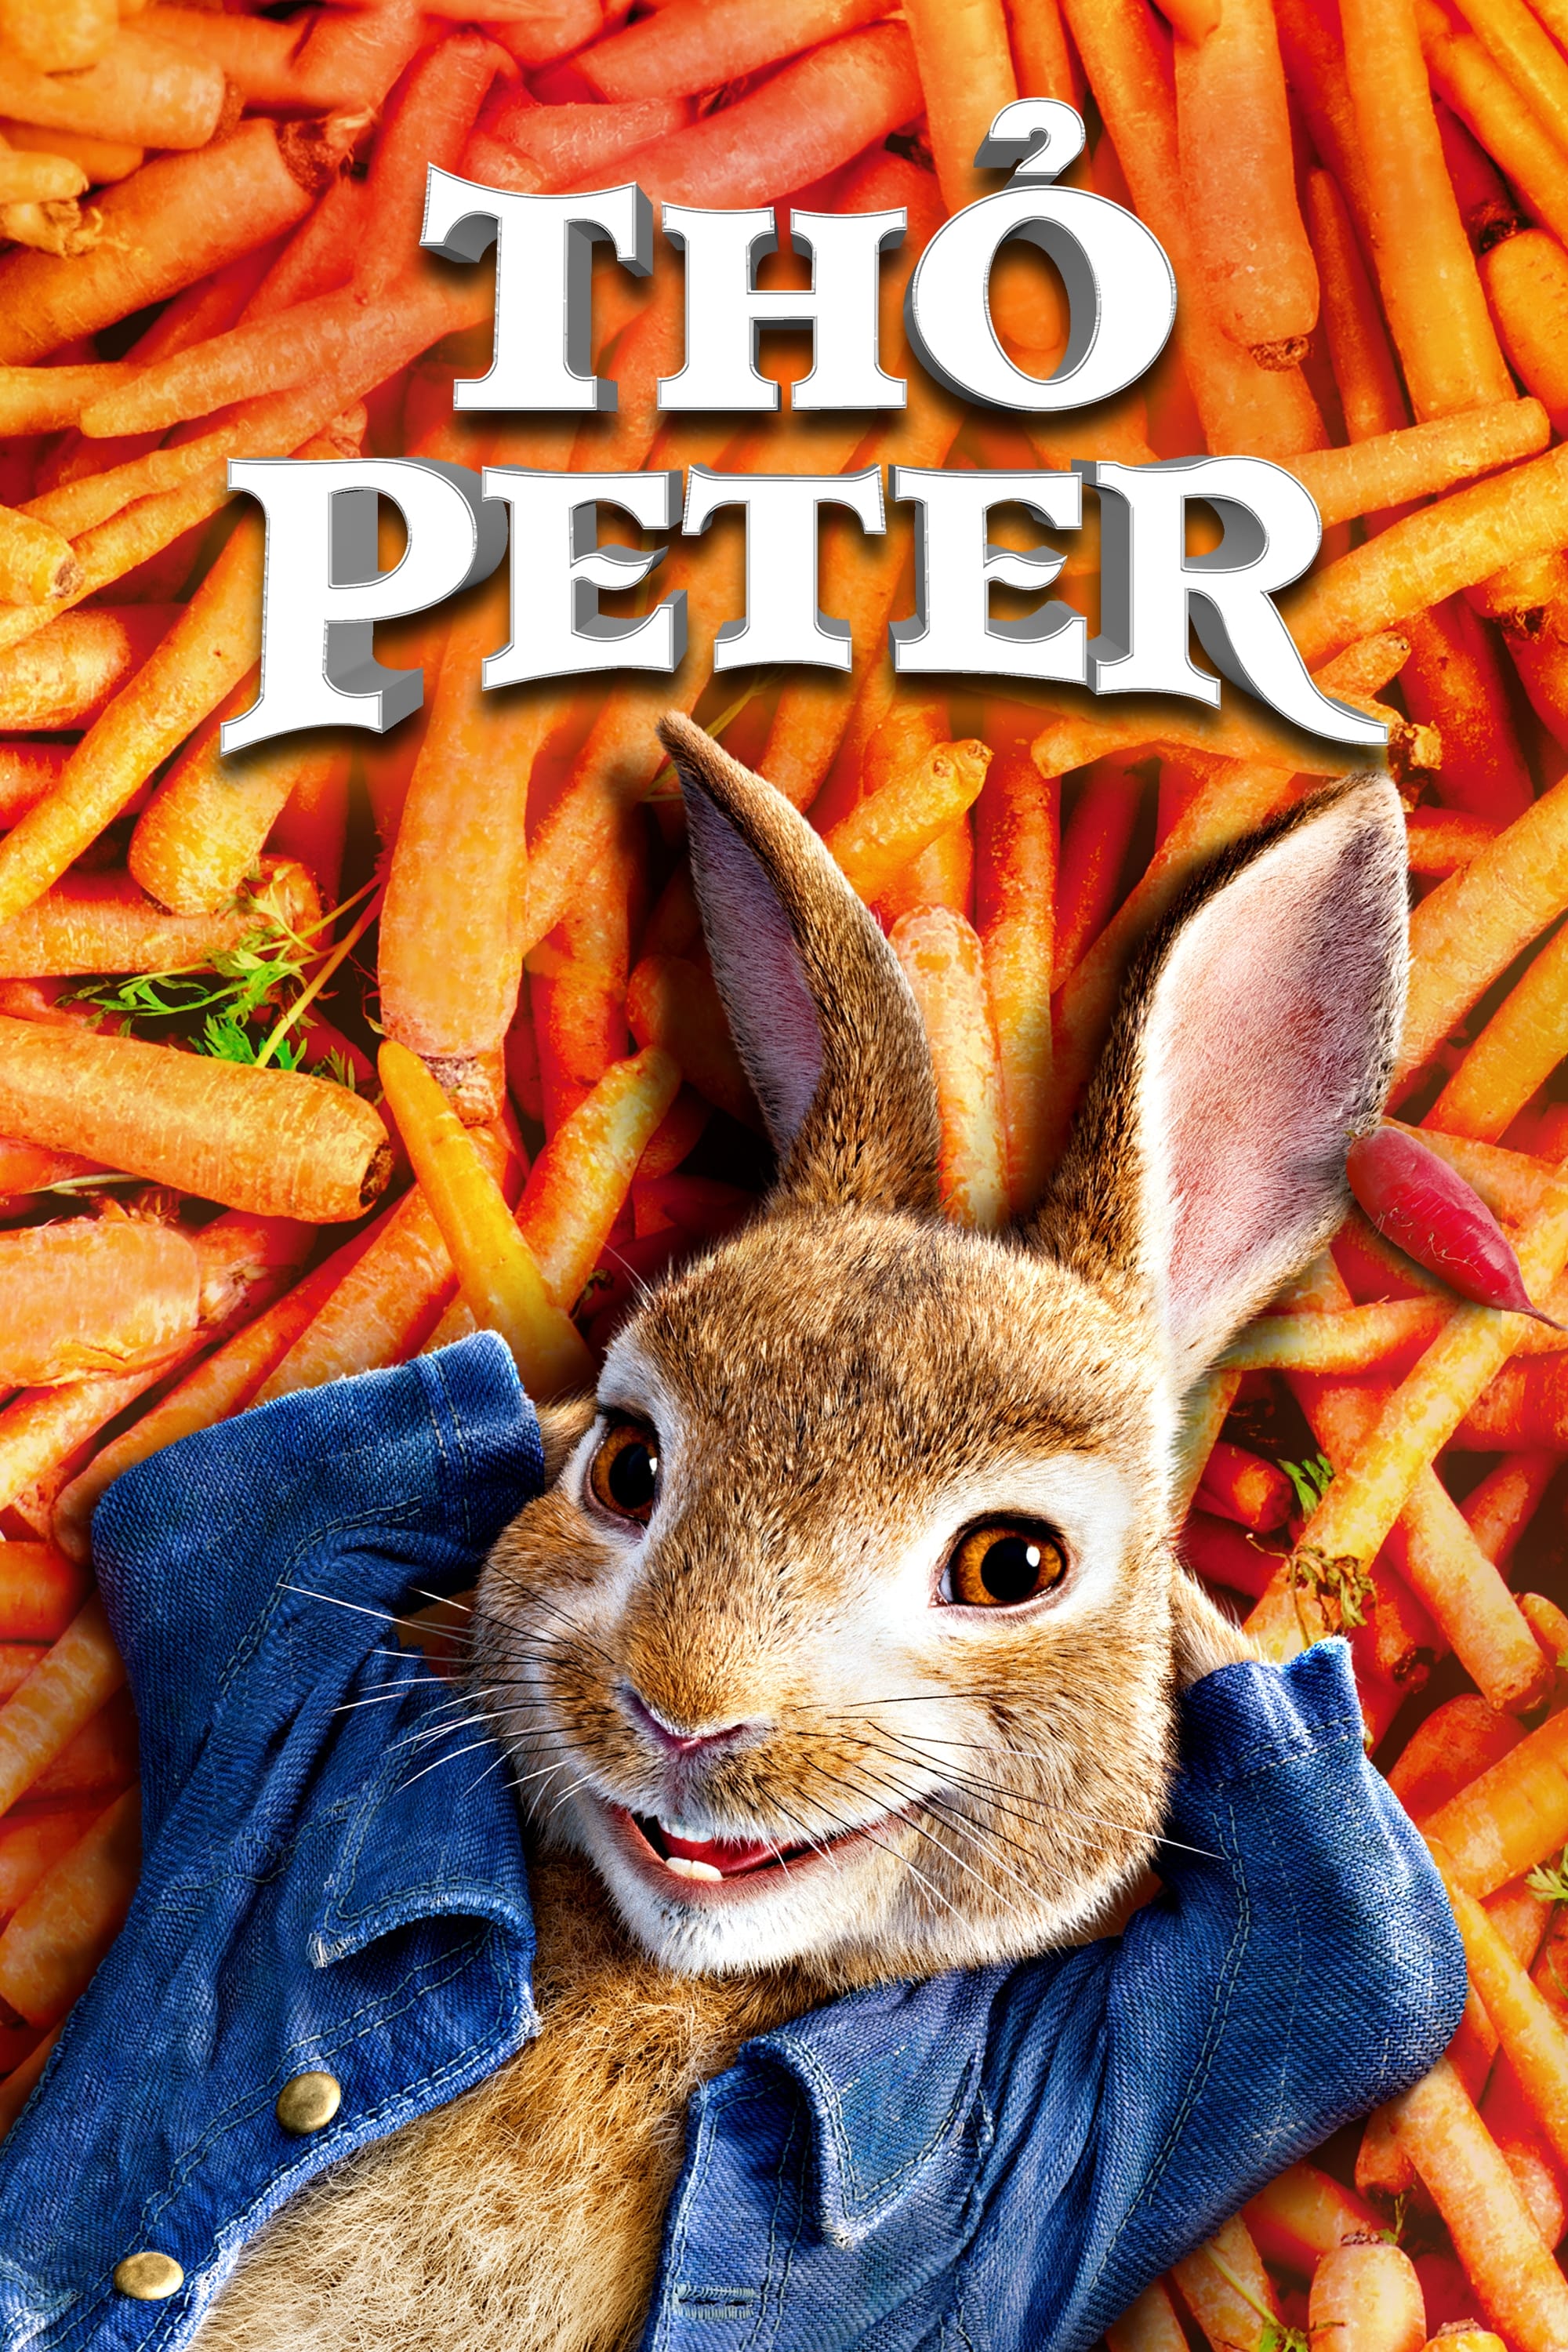 Thỏ Peter (Peter Rabbit) [2018]